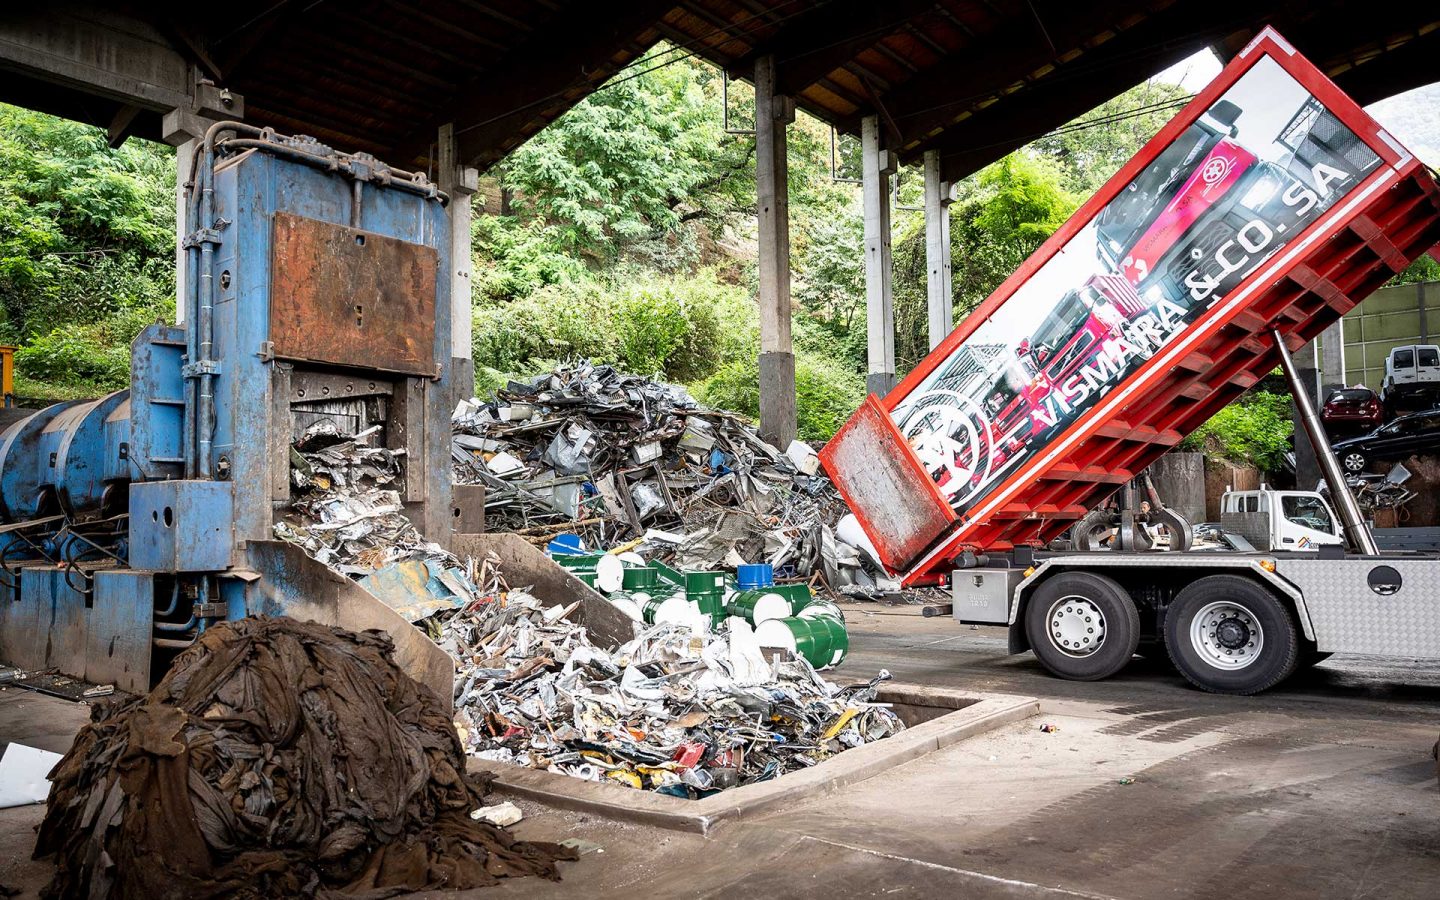 Camion scarica materiali riciclabili